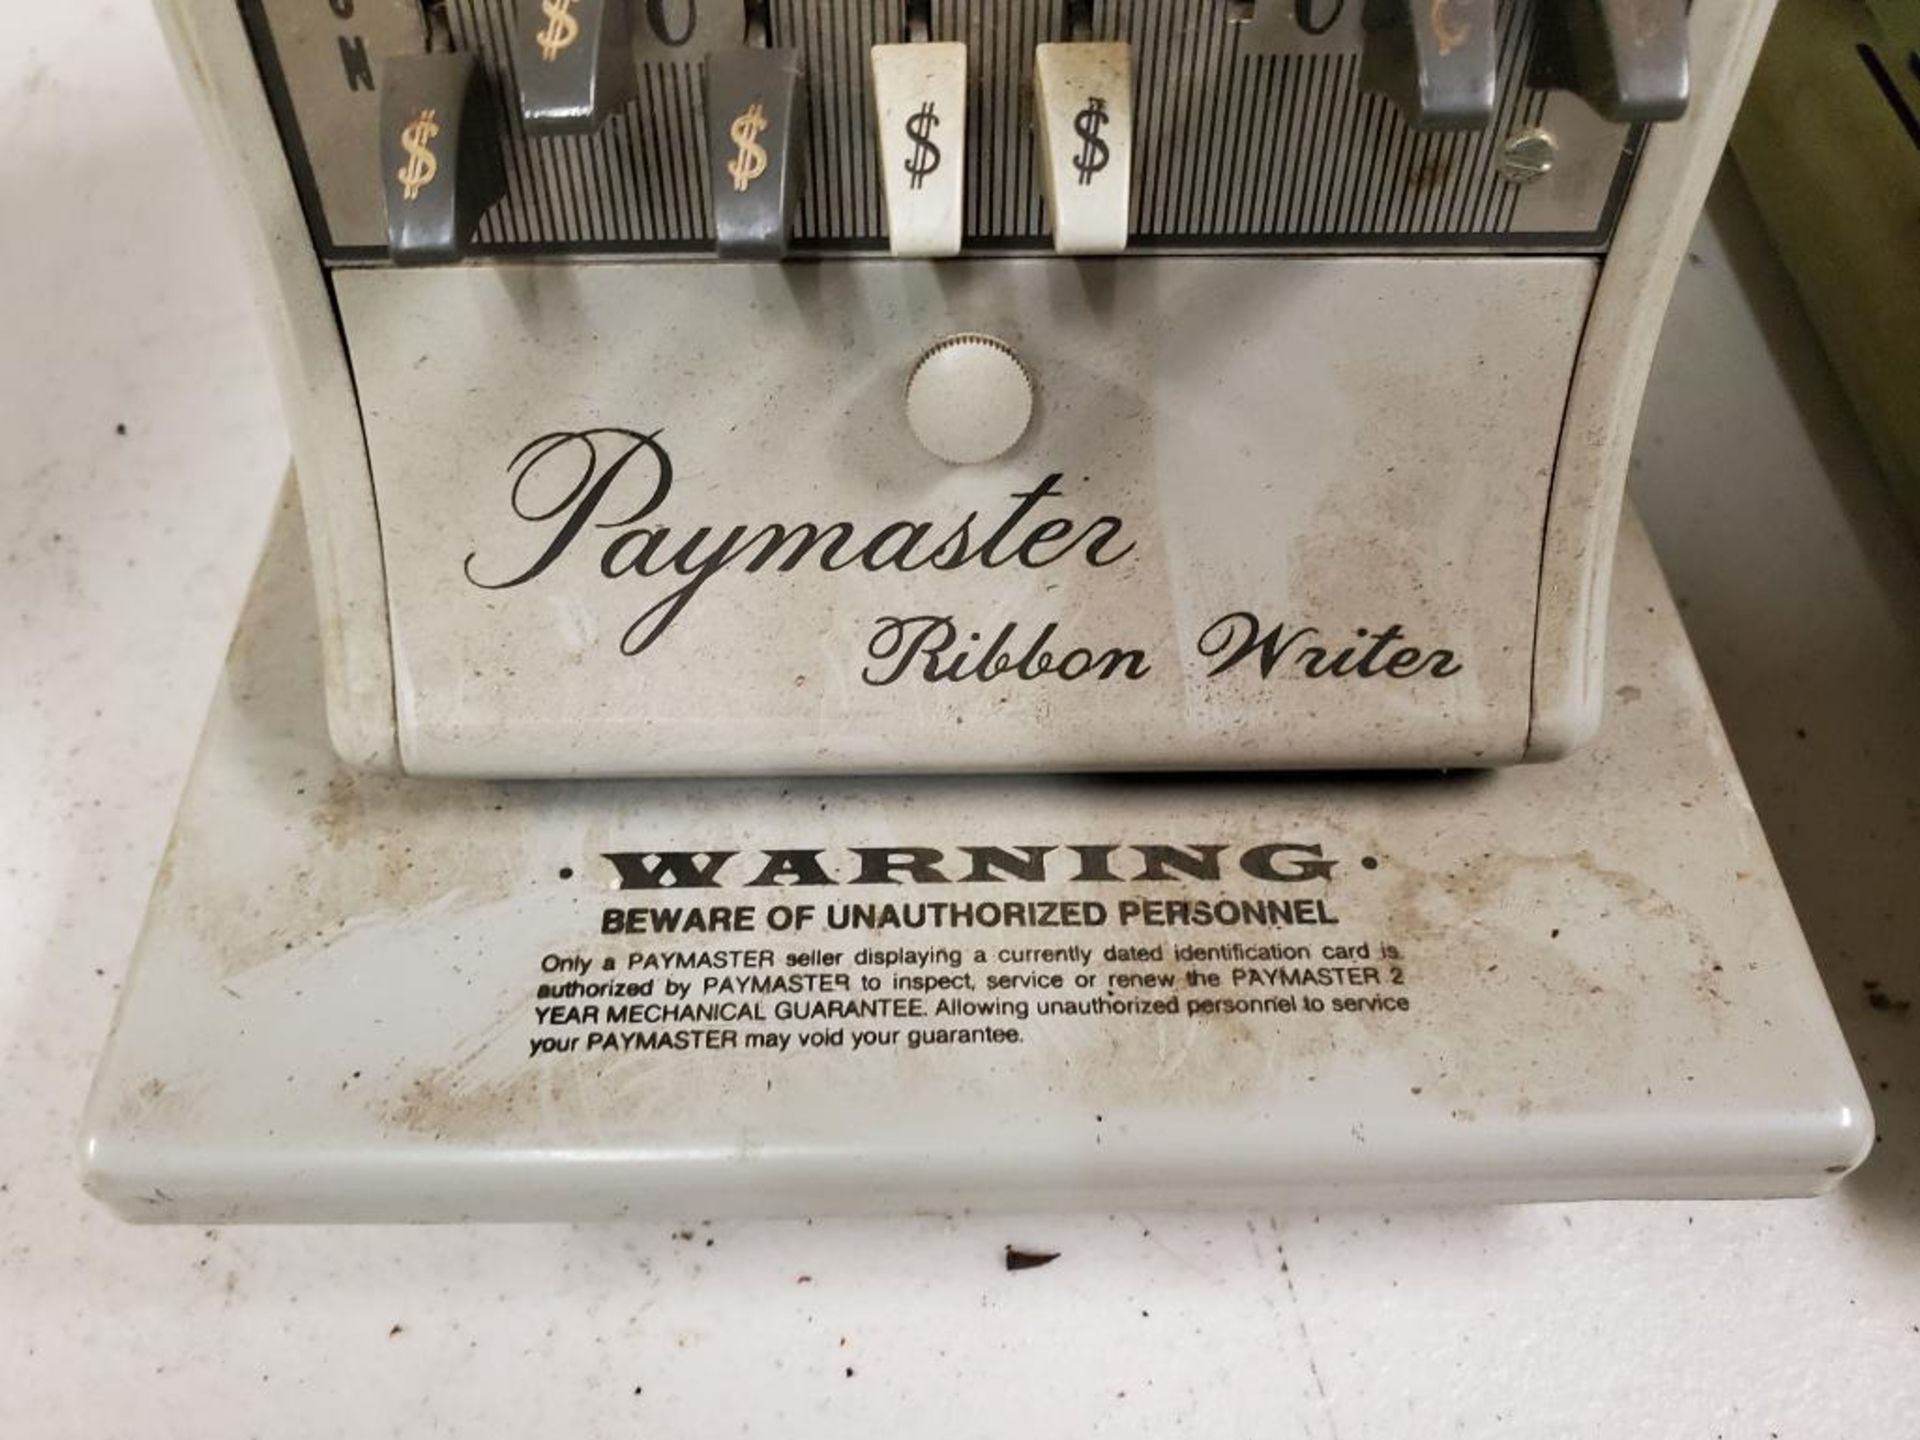 Qty 2 - Paymaster ribbon writer machine. - Image 2 of 5